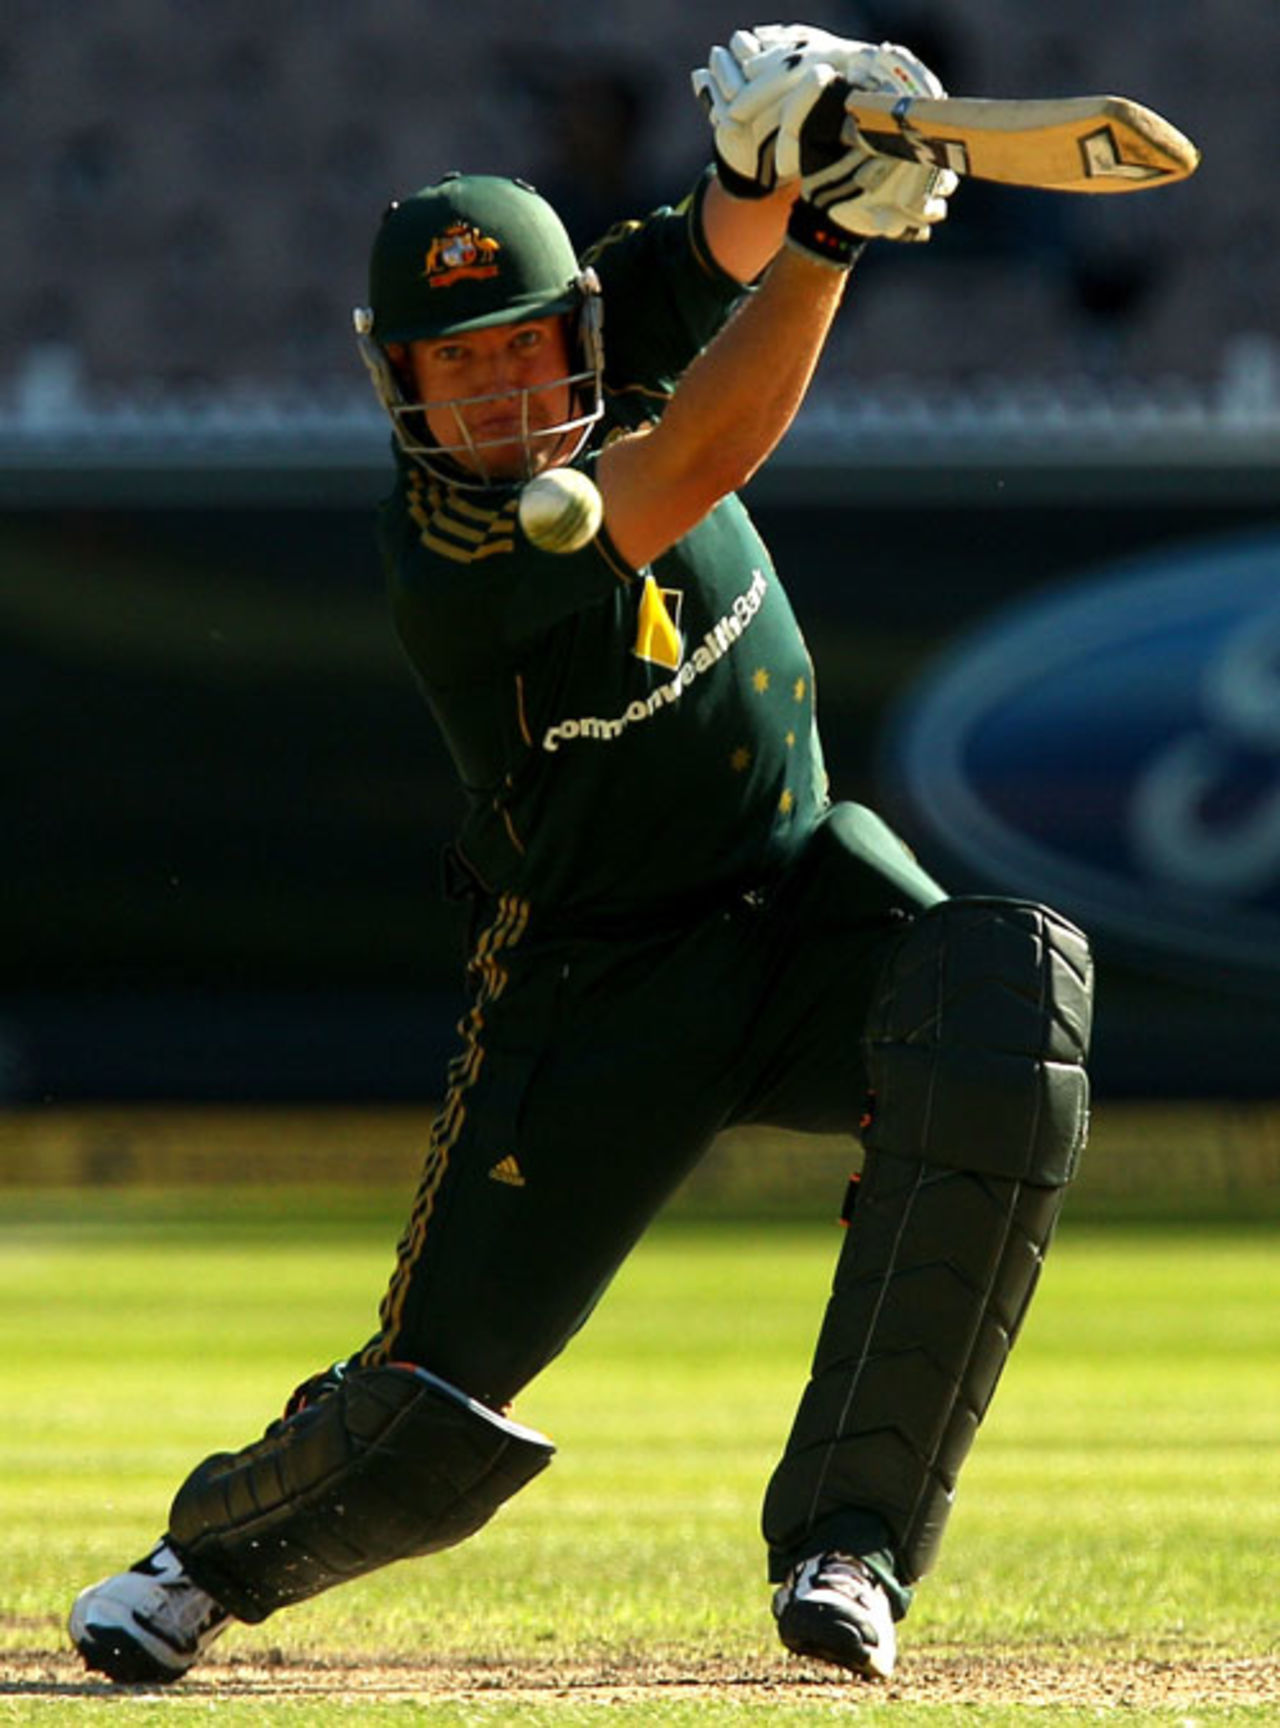 James Hopes sped to 57 off 26 balls, Australia v West Indies, 5th ODI, Melbourne, 19 February, 2010